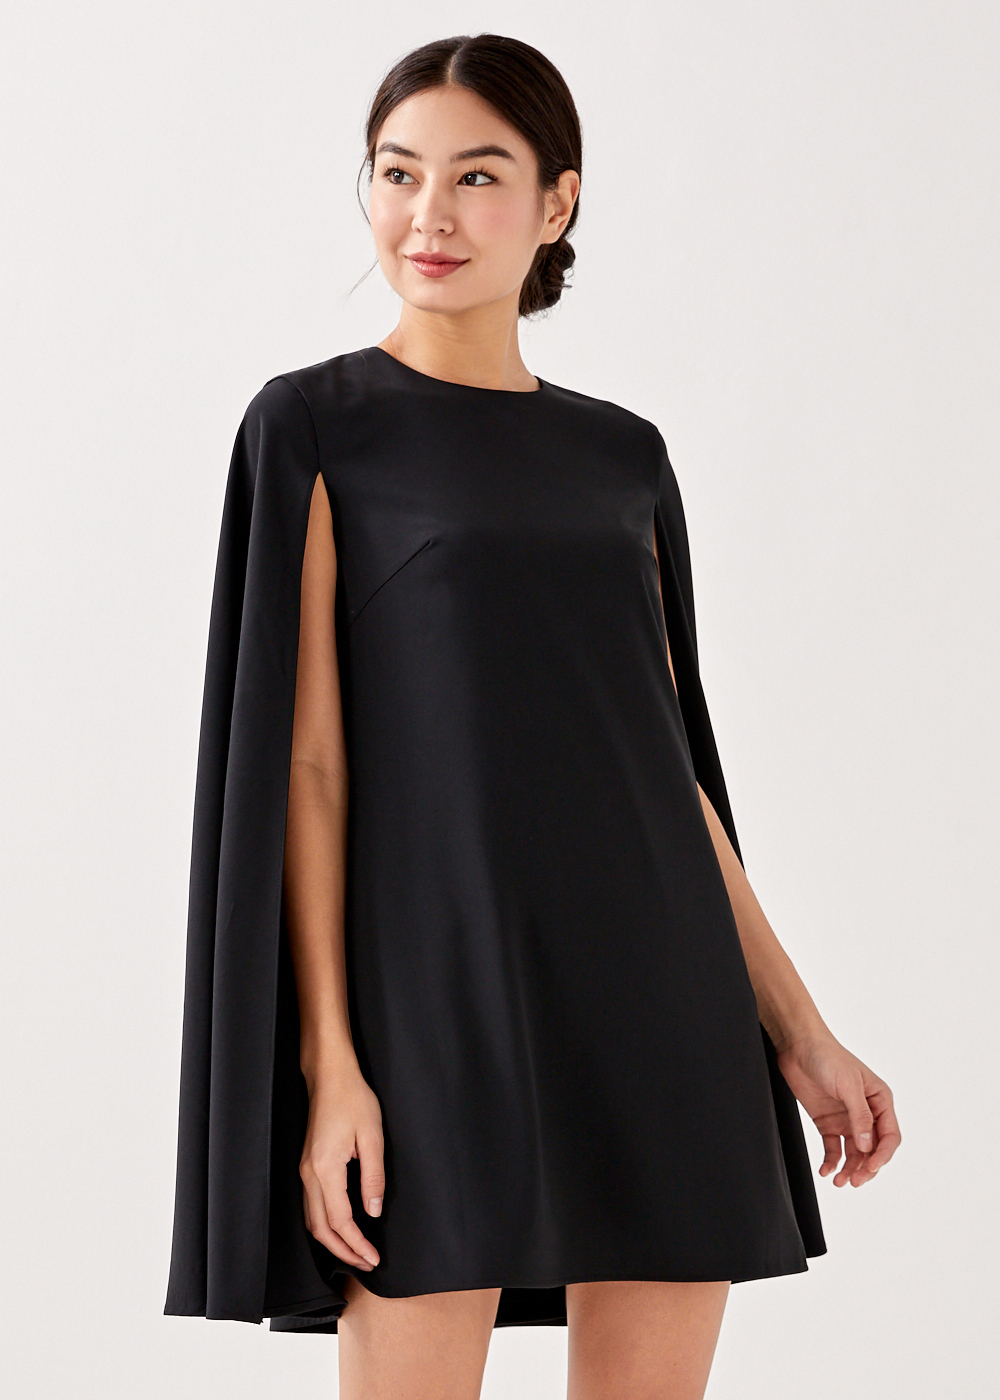 Buy Senna Cape Dress @ Love, Bonito Singapore | Shop Women's Fashion Online